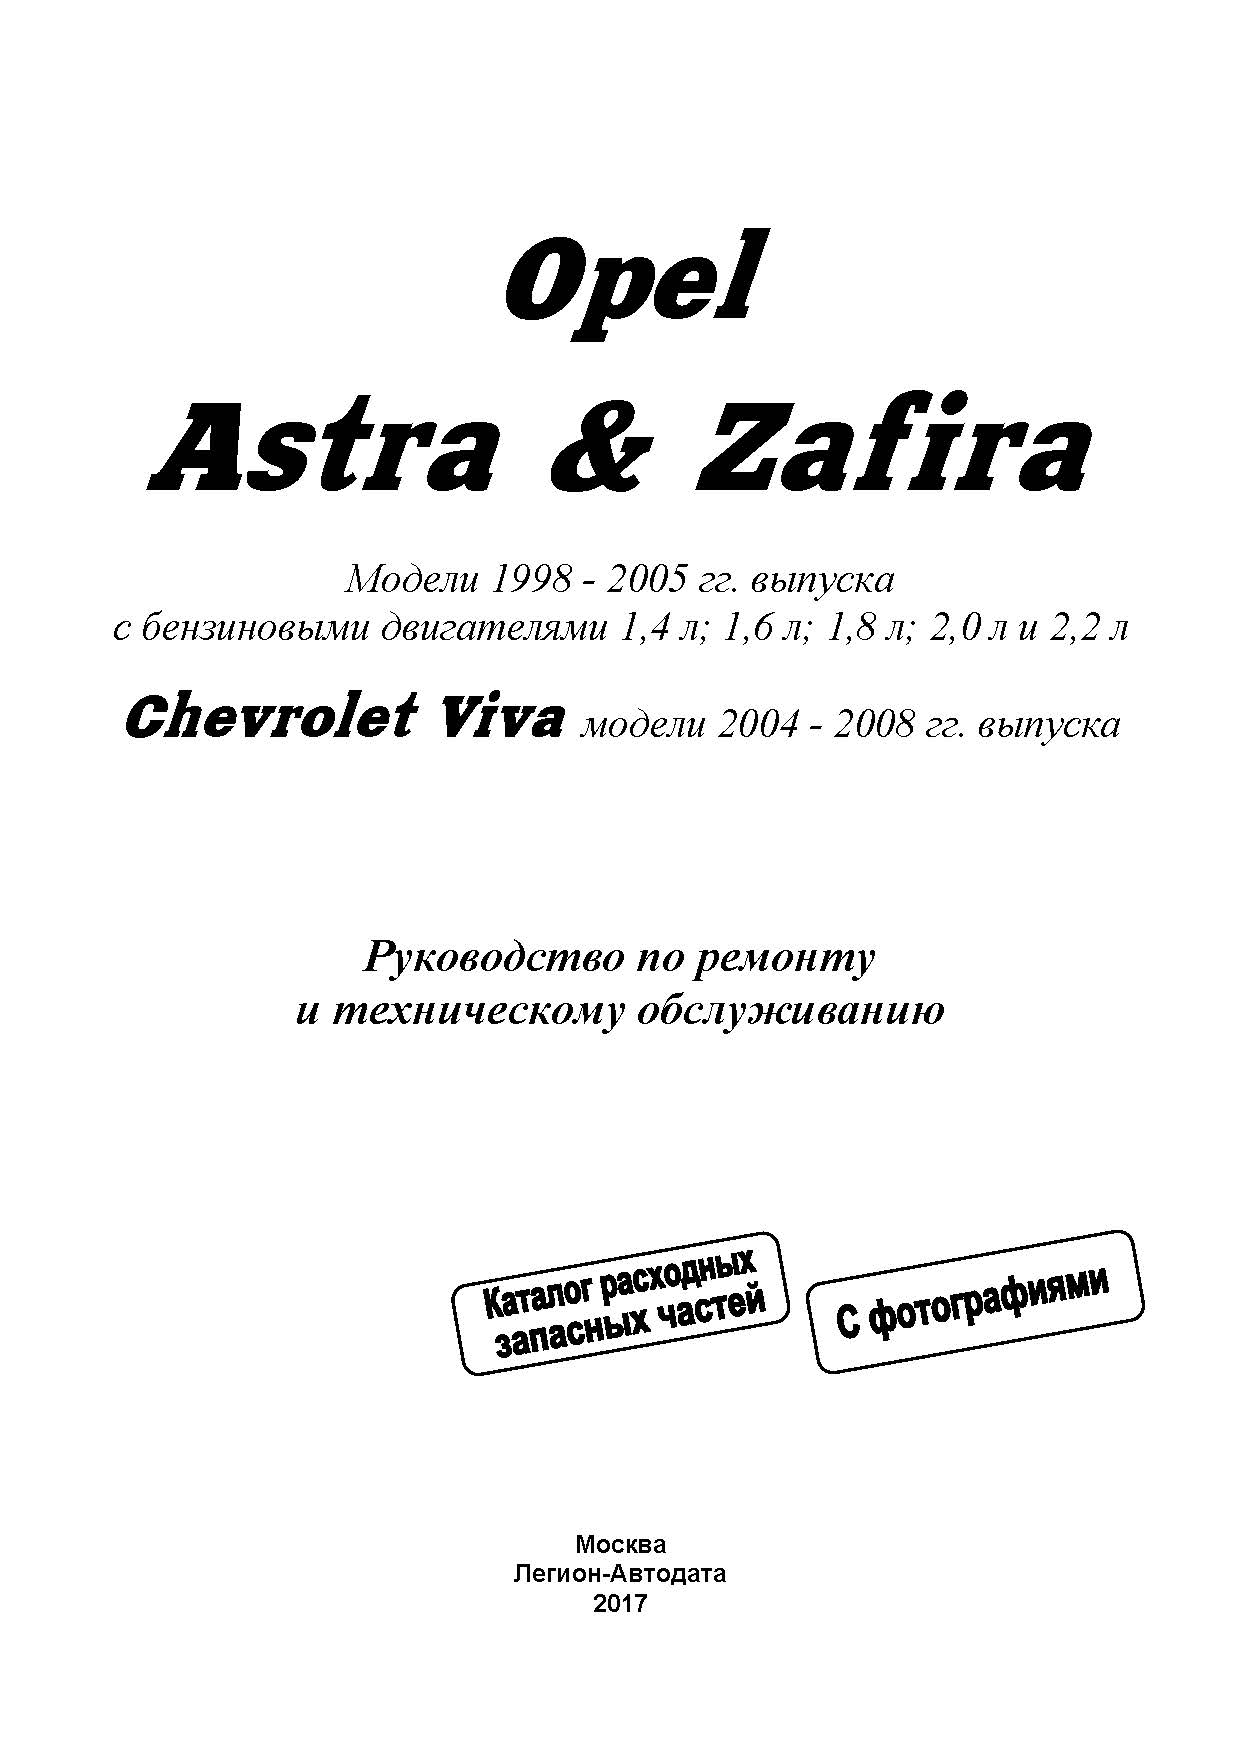 Книга: OPEL ASTRA / ZAFIRA / CHEVROLET VIVA (б) 1998-2004 г.в., рем., экспл., то | Алфамер Паблишинг